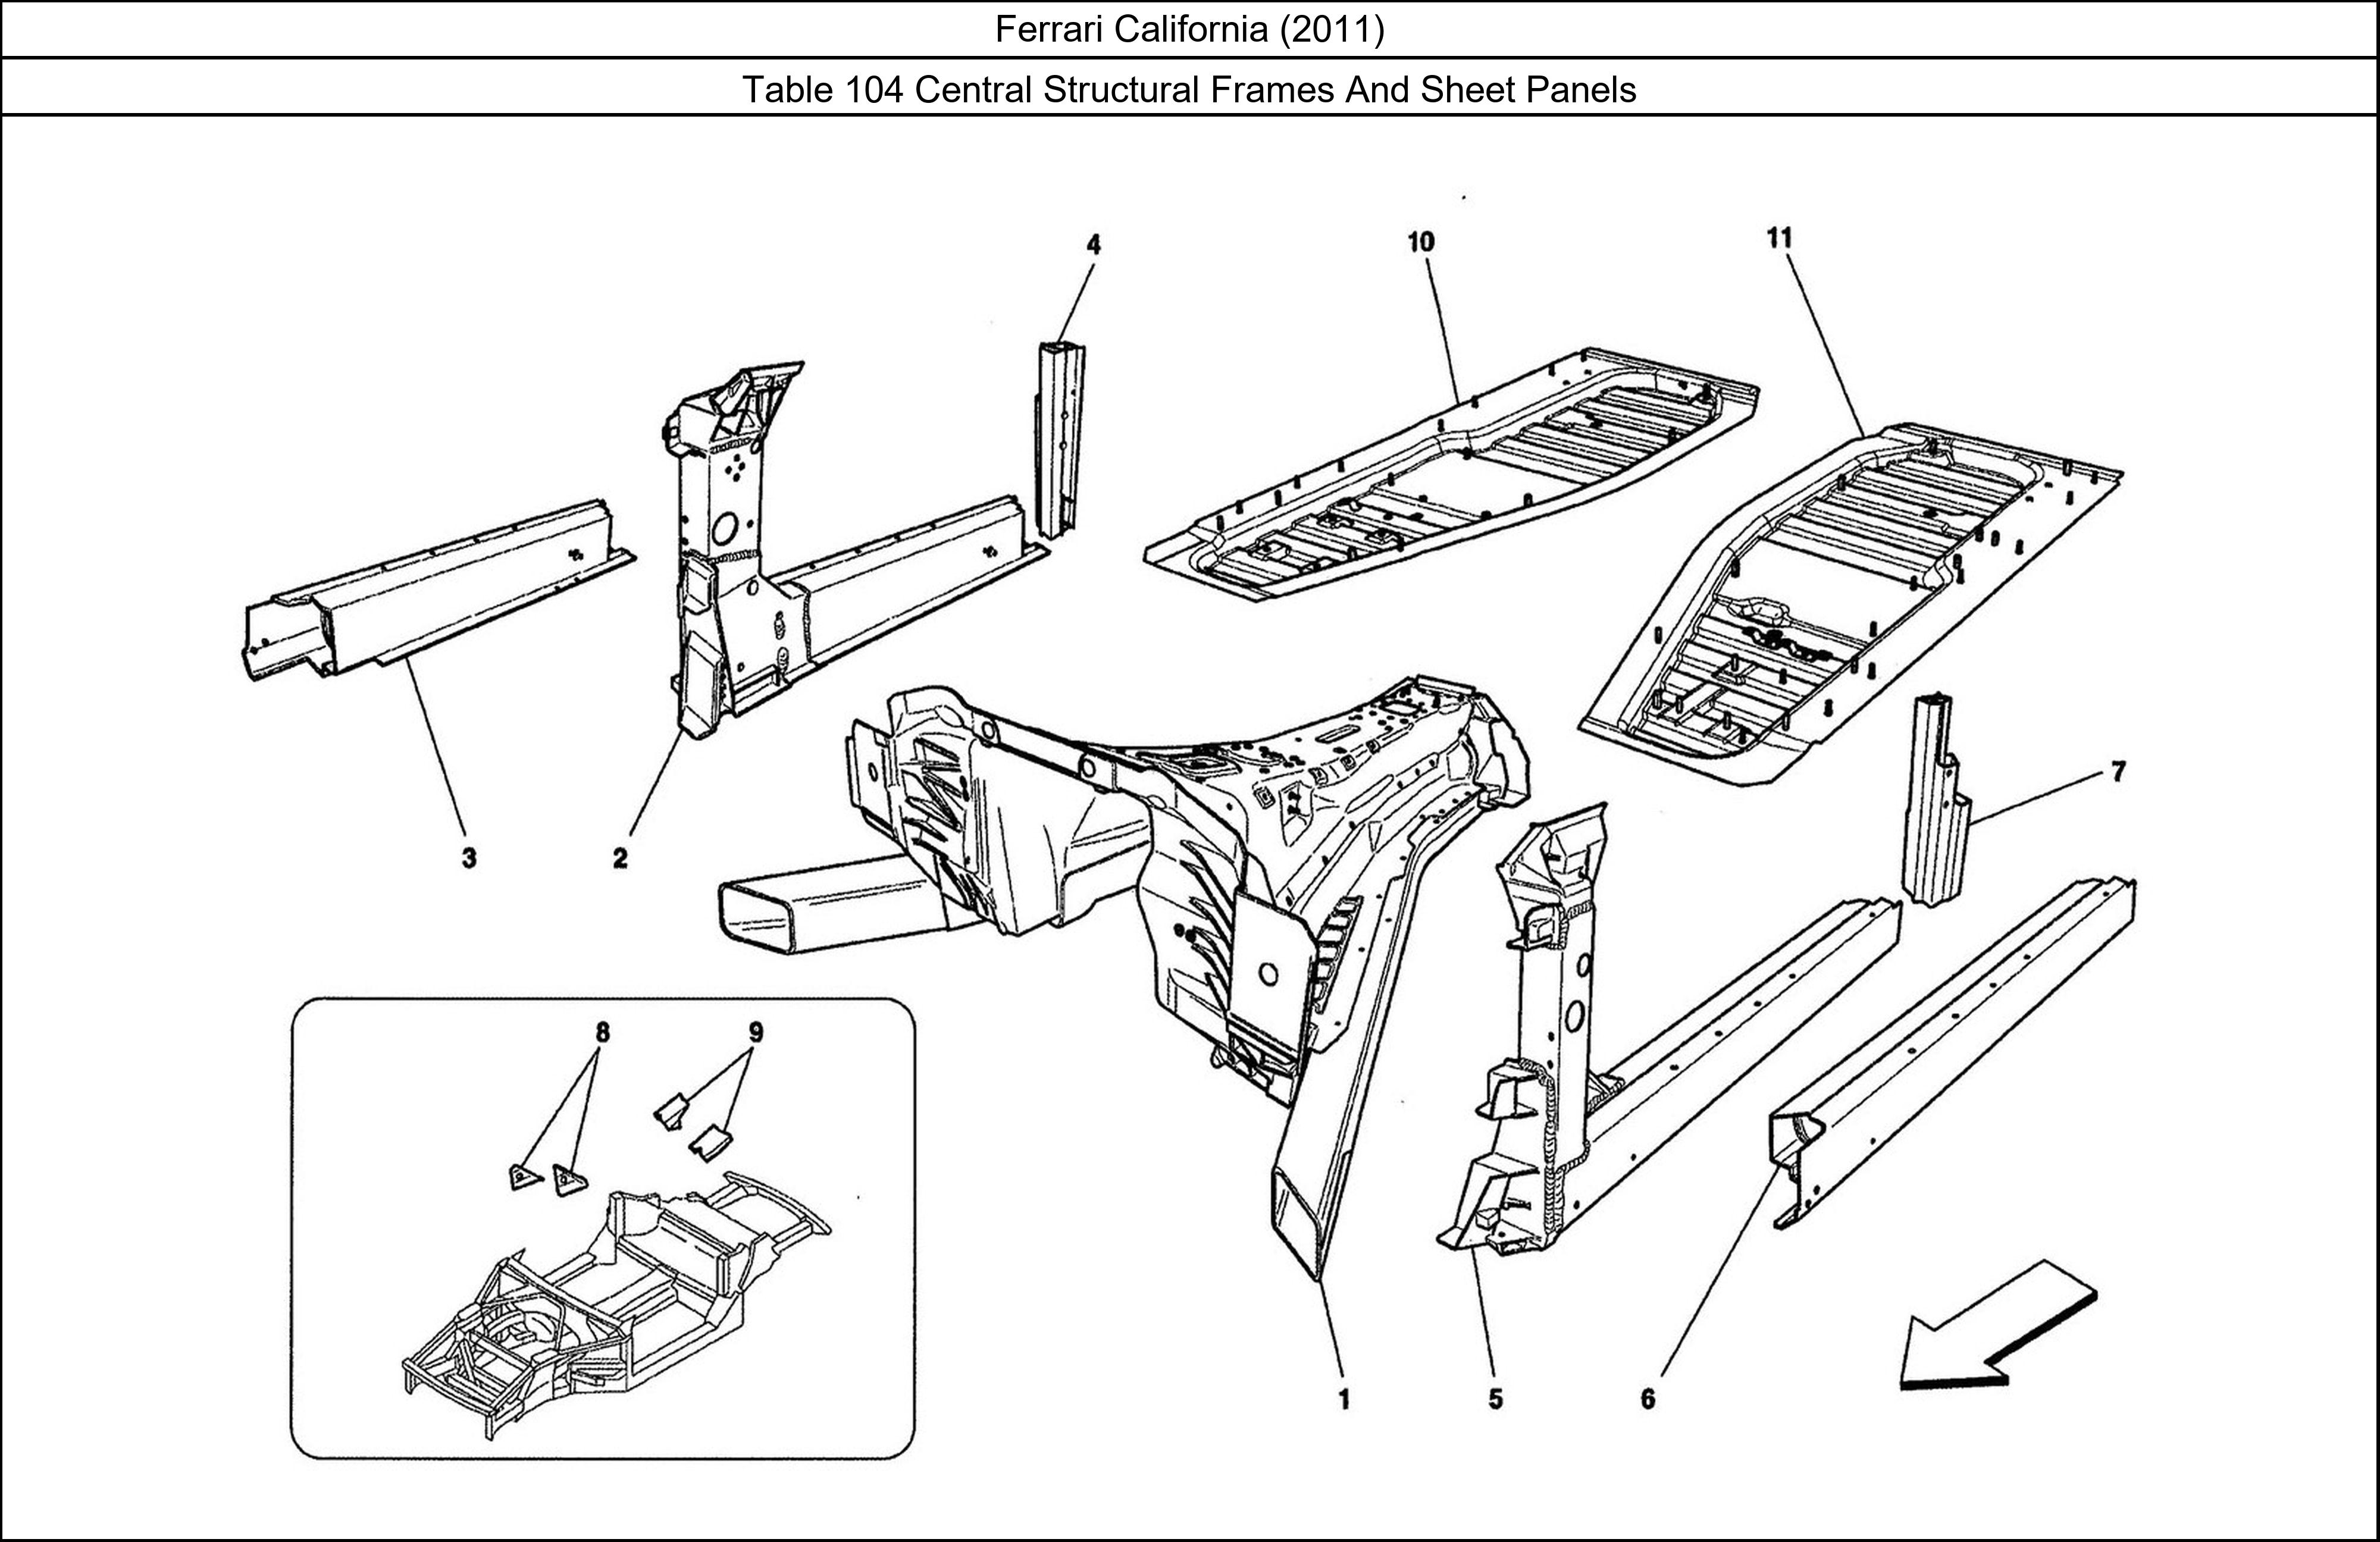 Ferrari Parts Ferrari California (2011) Table 104 Central Structural Frames And Sheet Panels